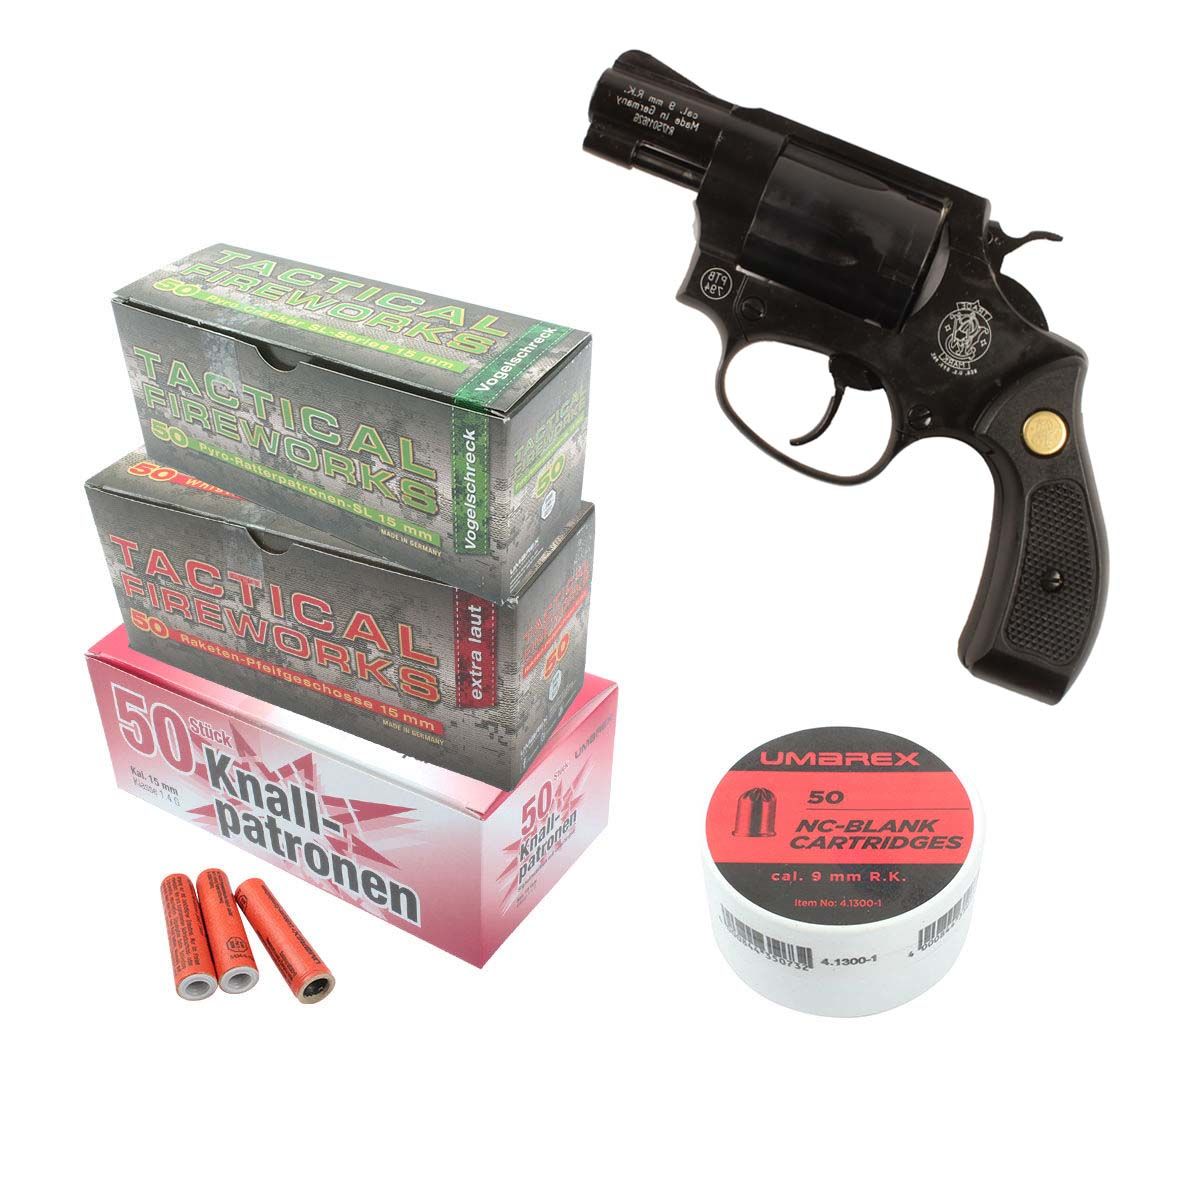 Pack pistolet effaroucheur 9mm SMITH & WESSON + munitions